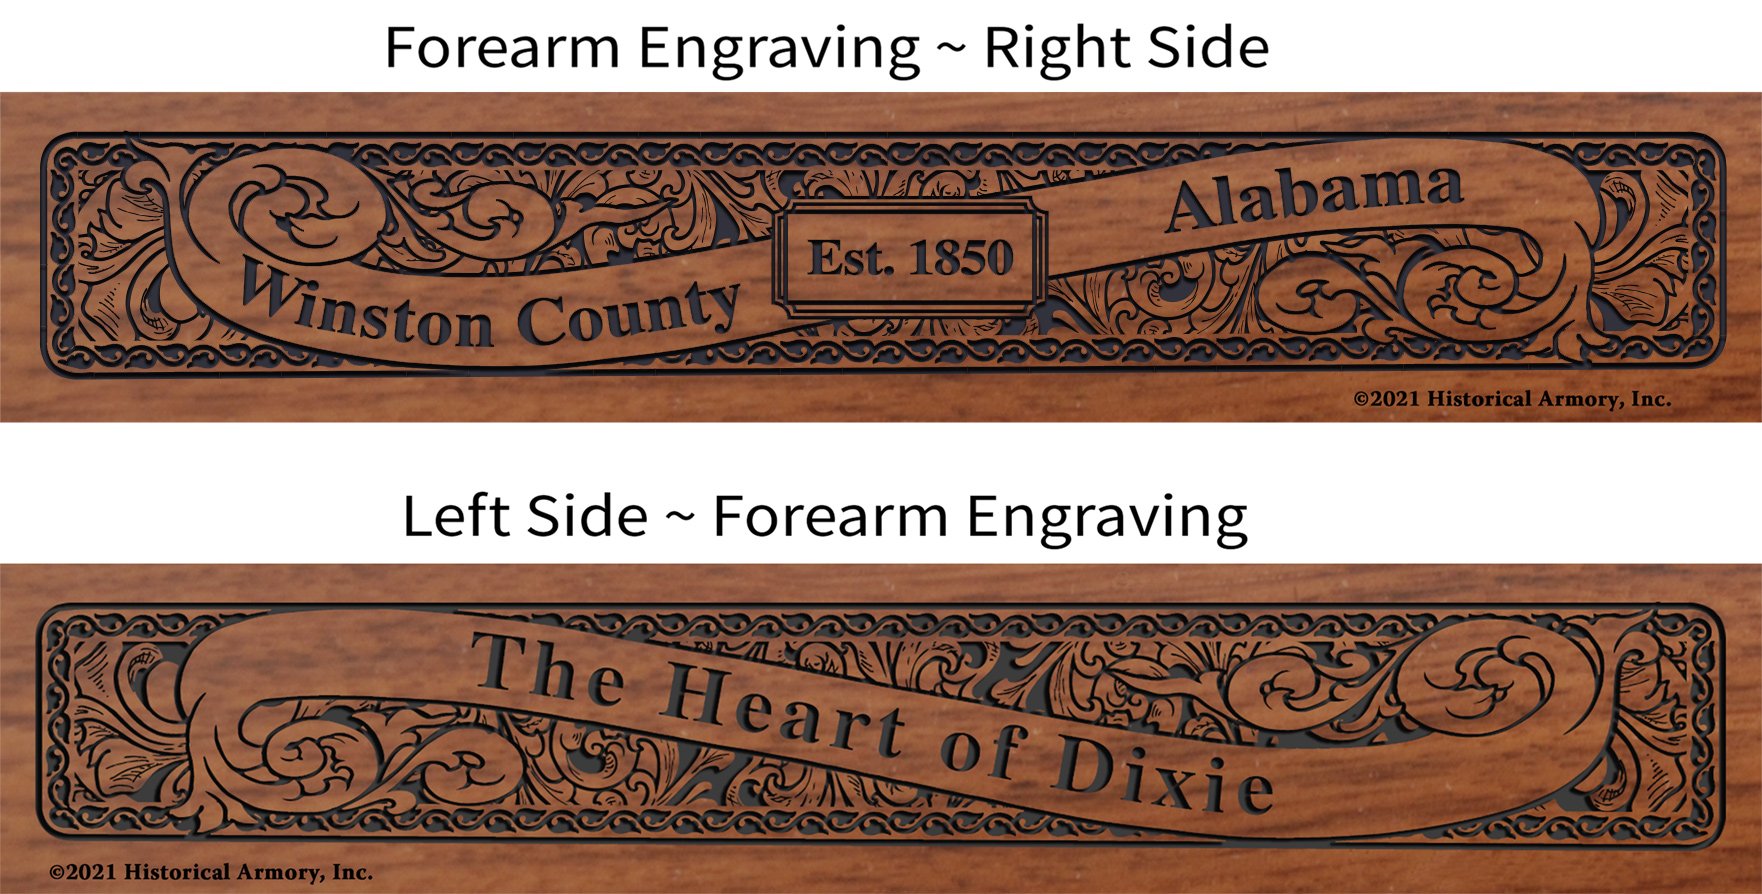 Winston County Alabama Establishment and Motto History Engraved Rifle Forearm